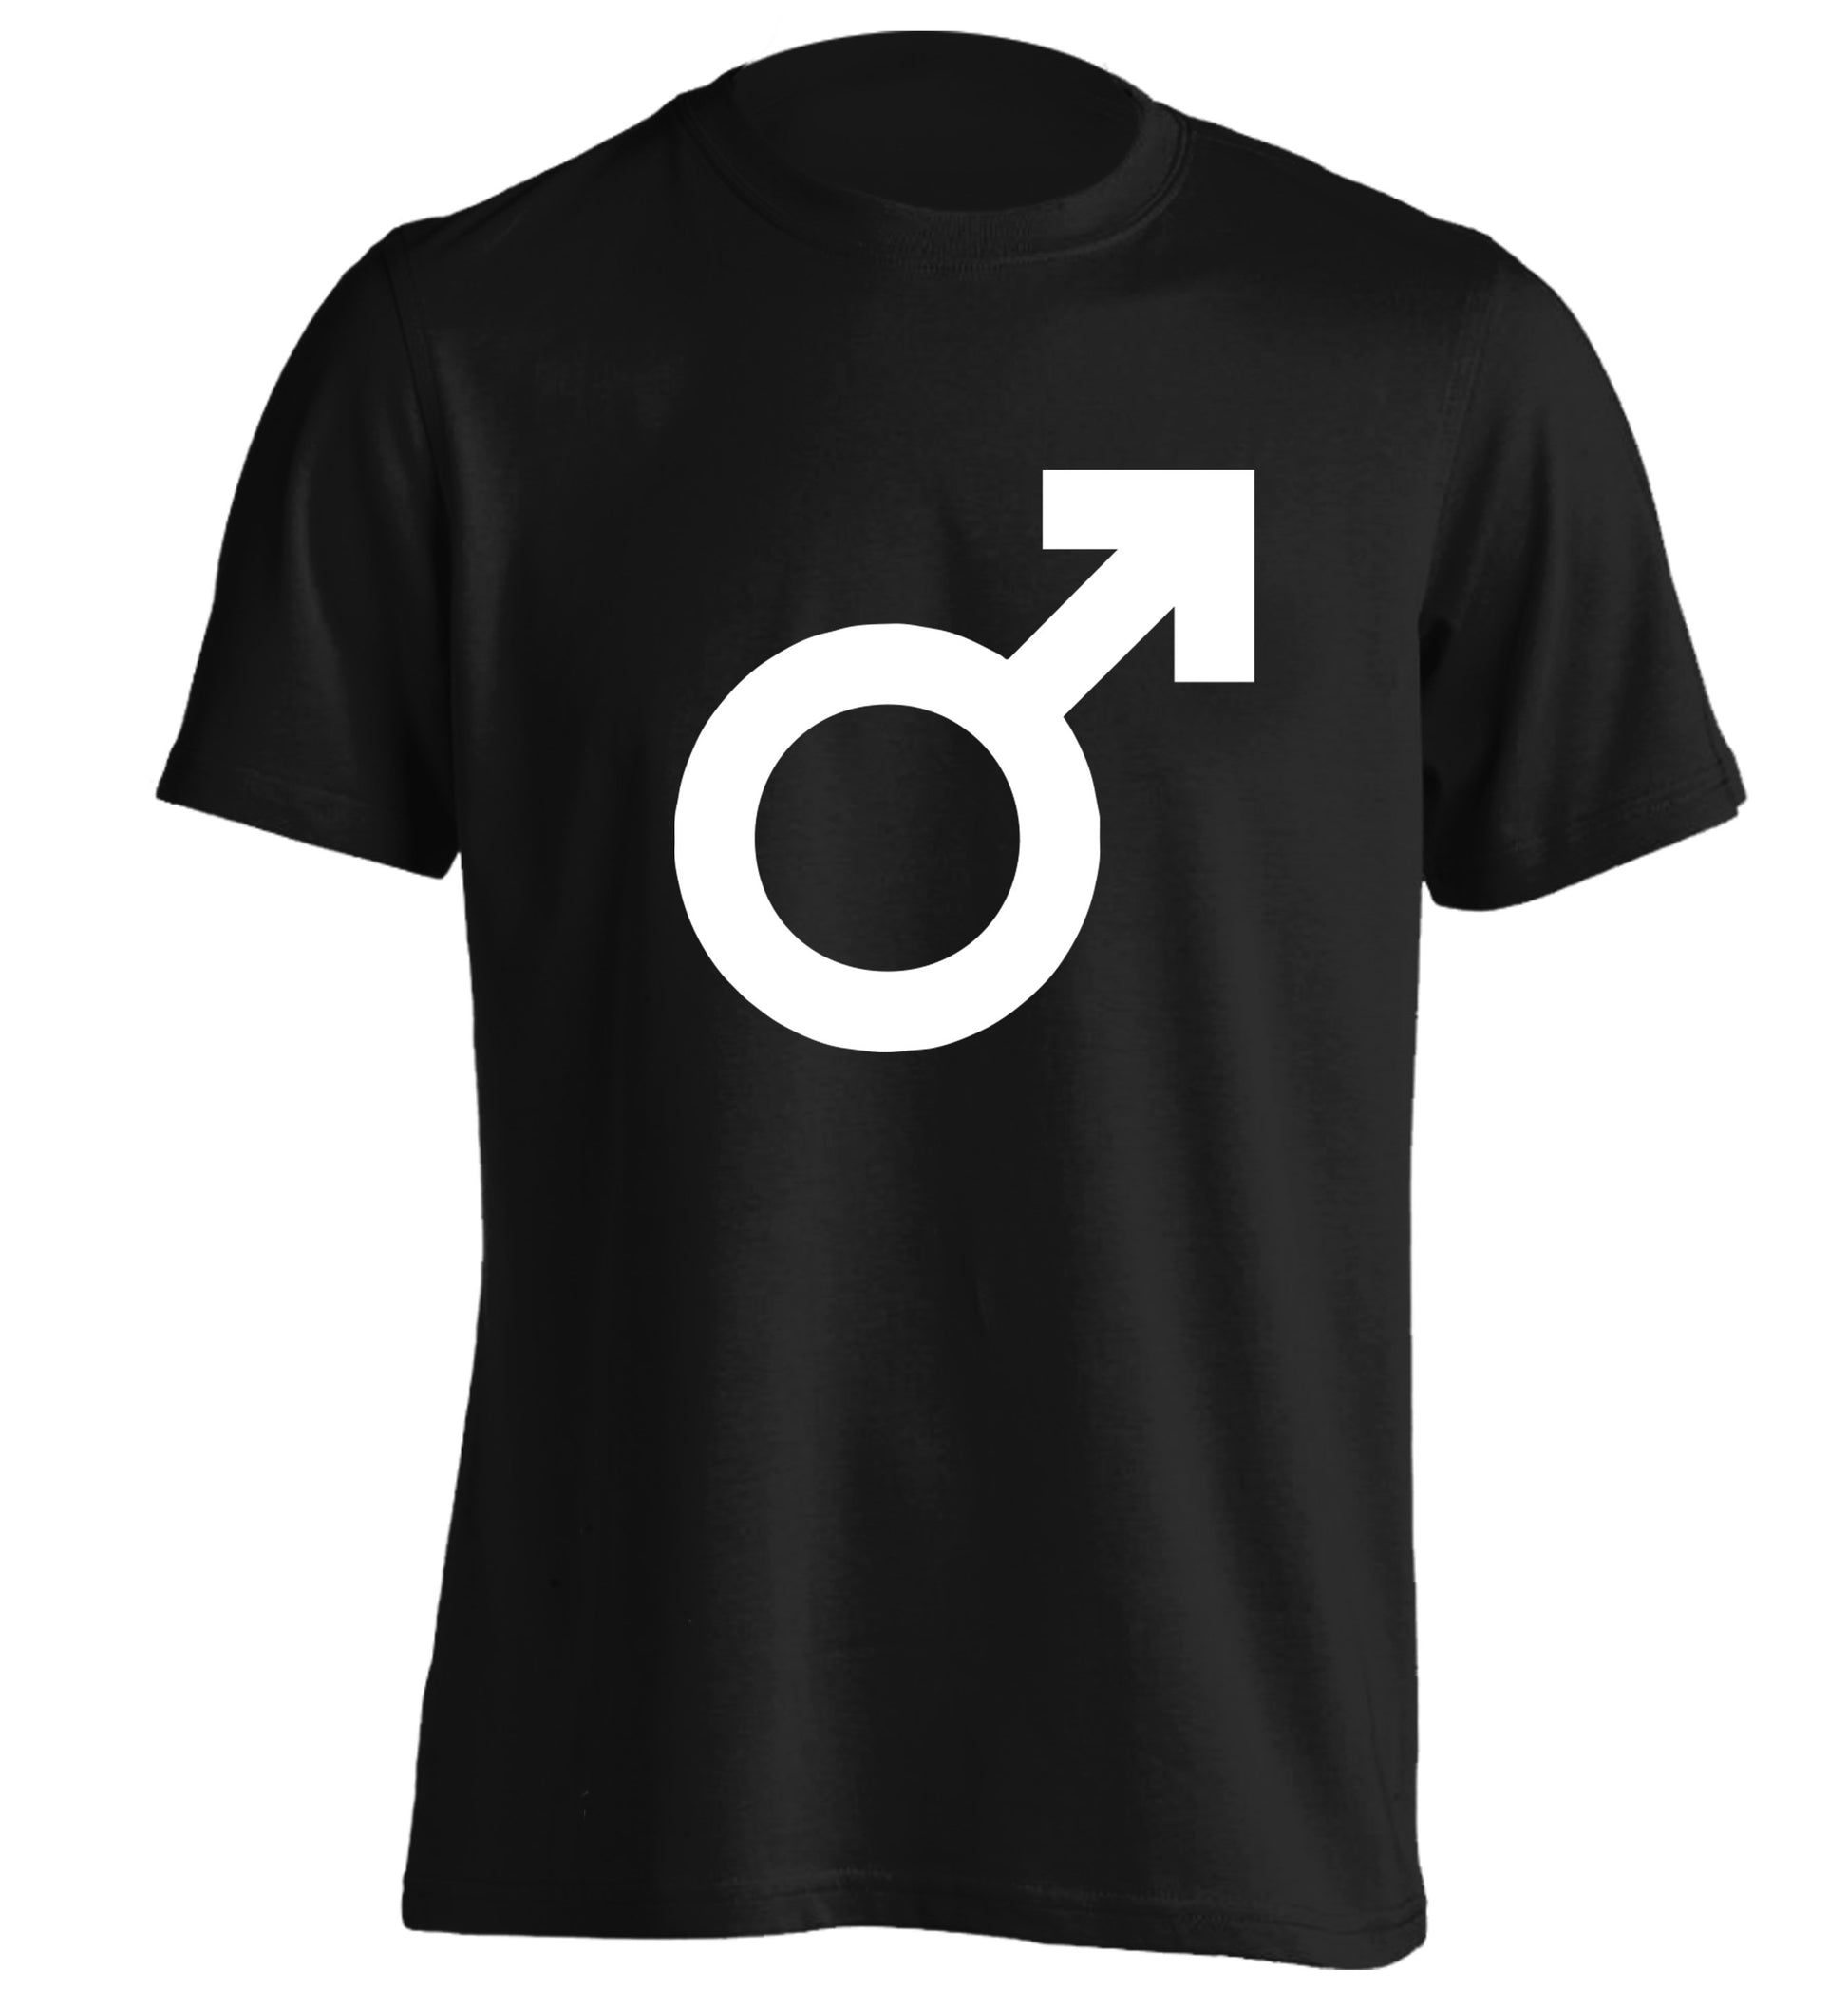 Male symbol large adults unisex black Tshirt 2XL